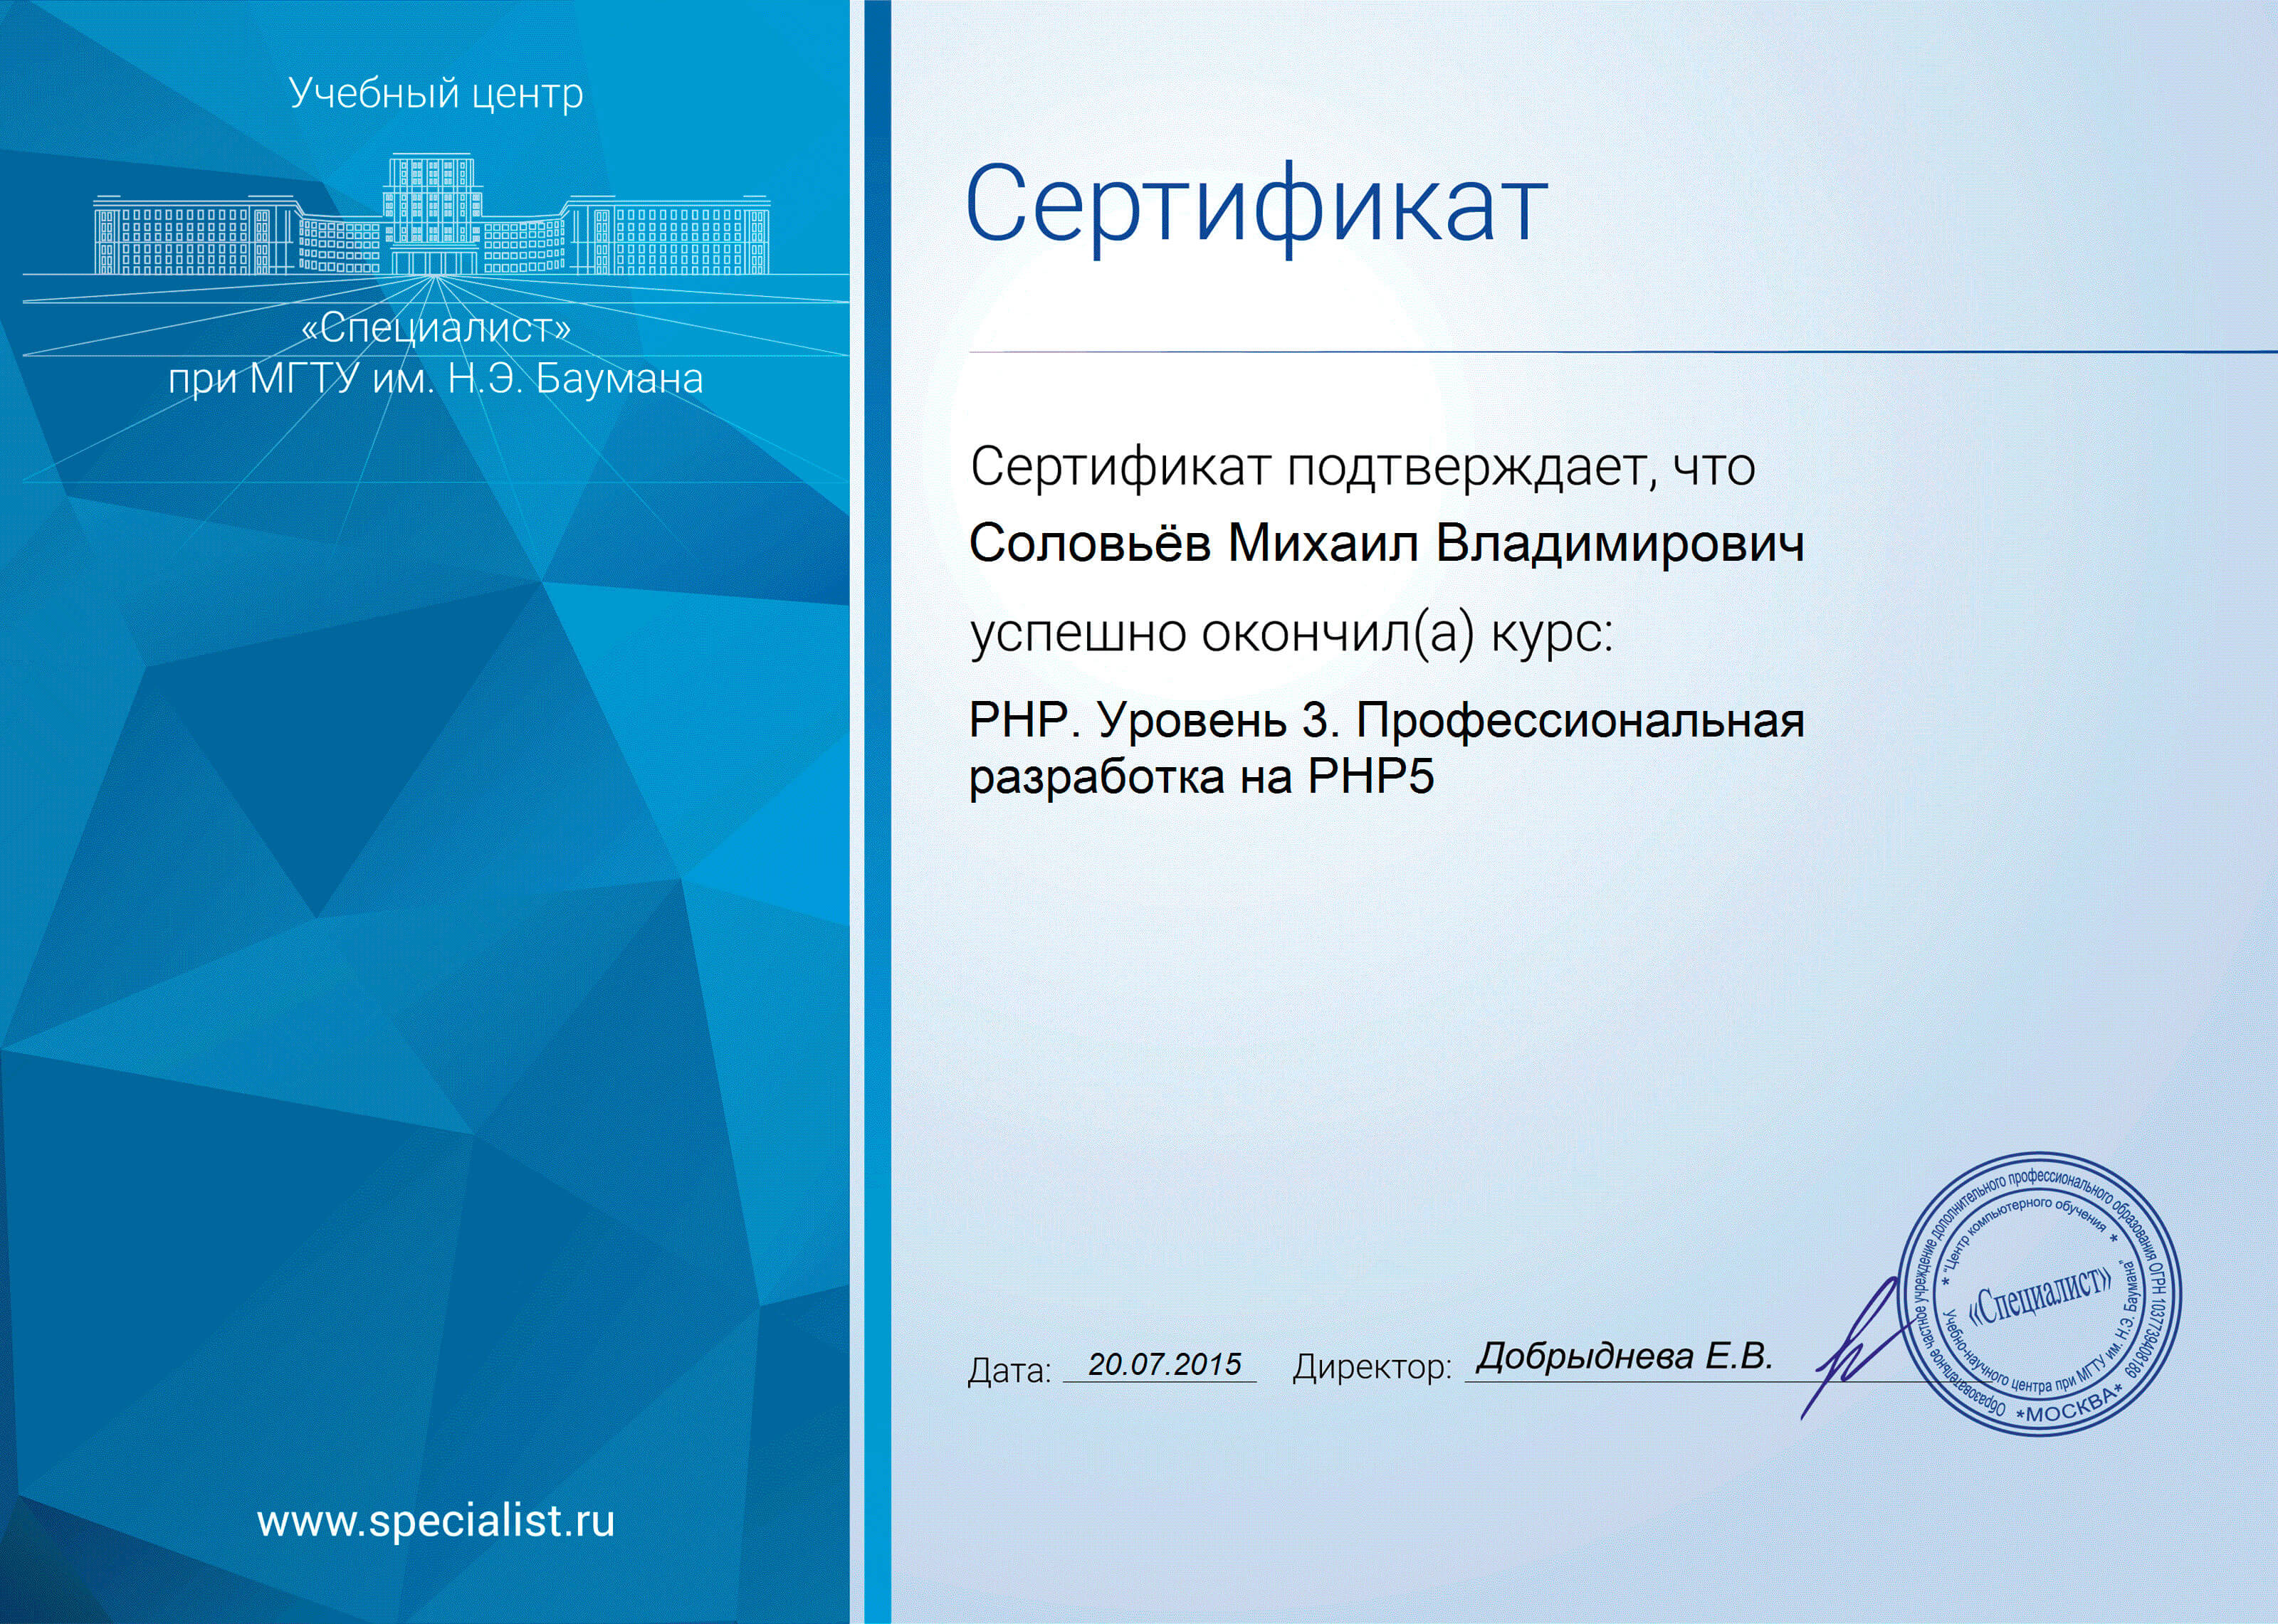 Сертификат “PHP уровень 3”